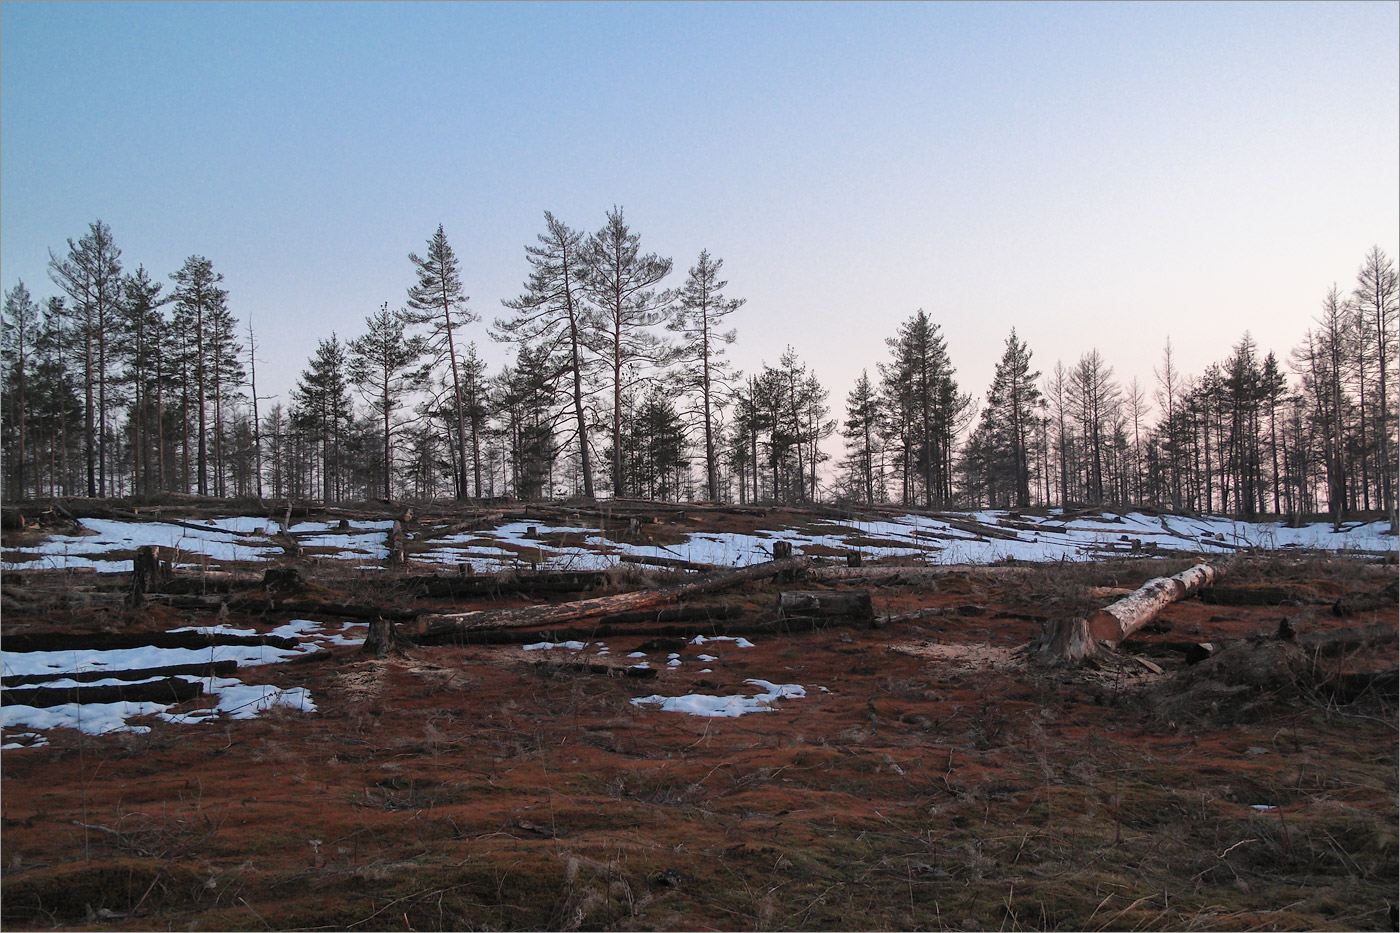 Нижняя Луга, image of landscape/habitat.